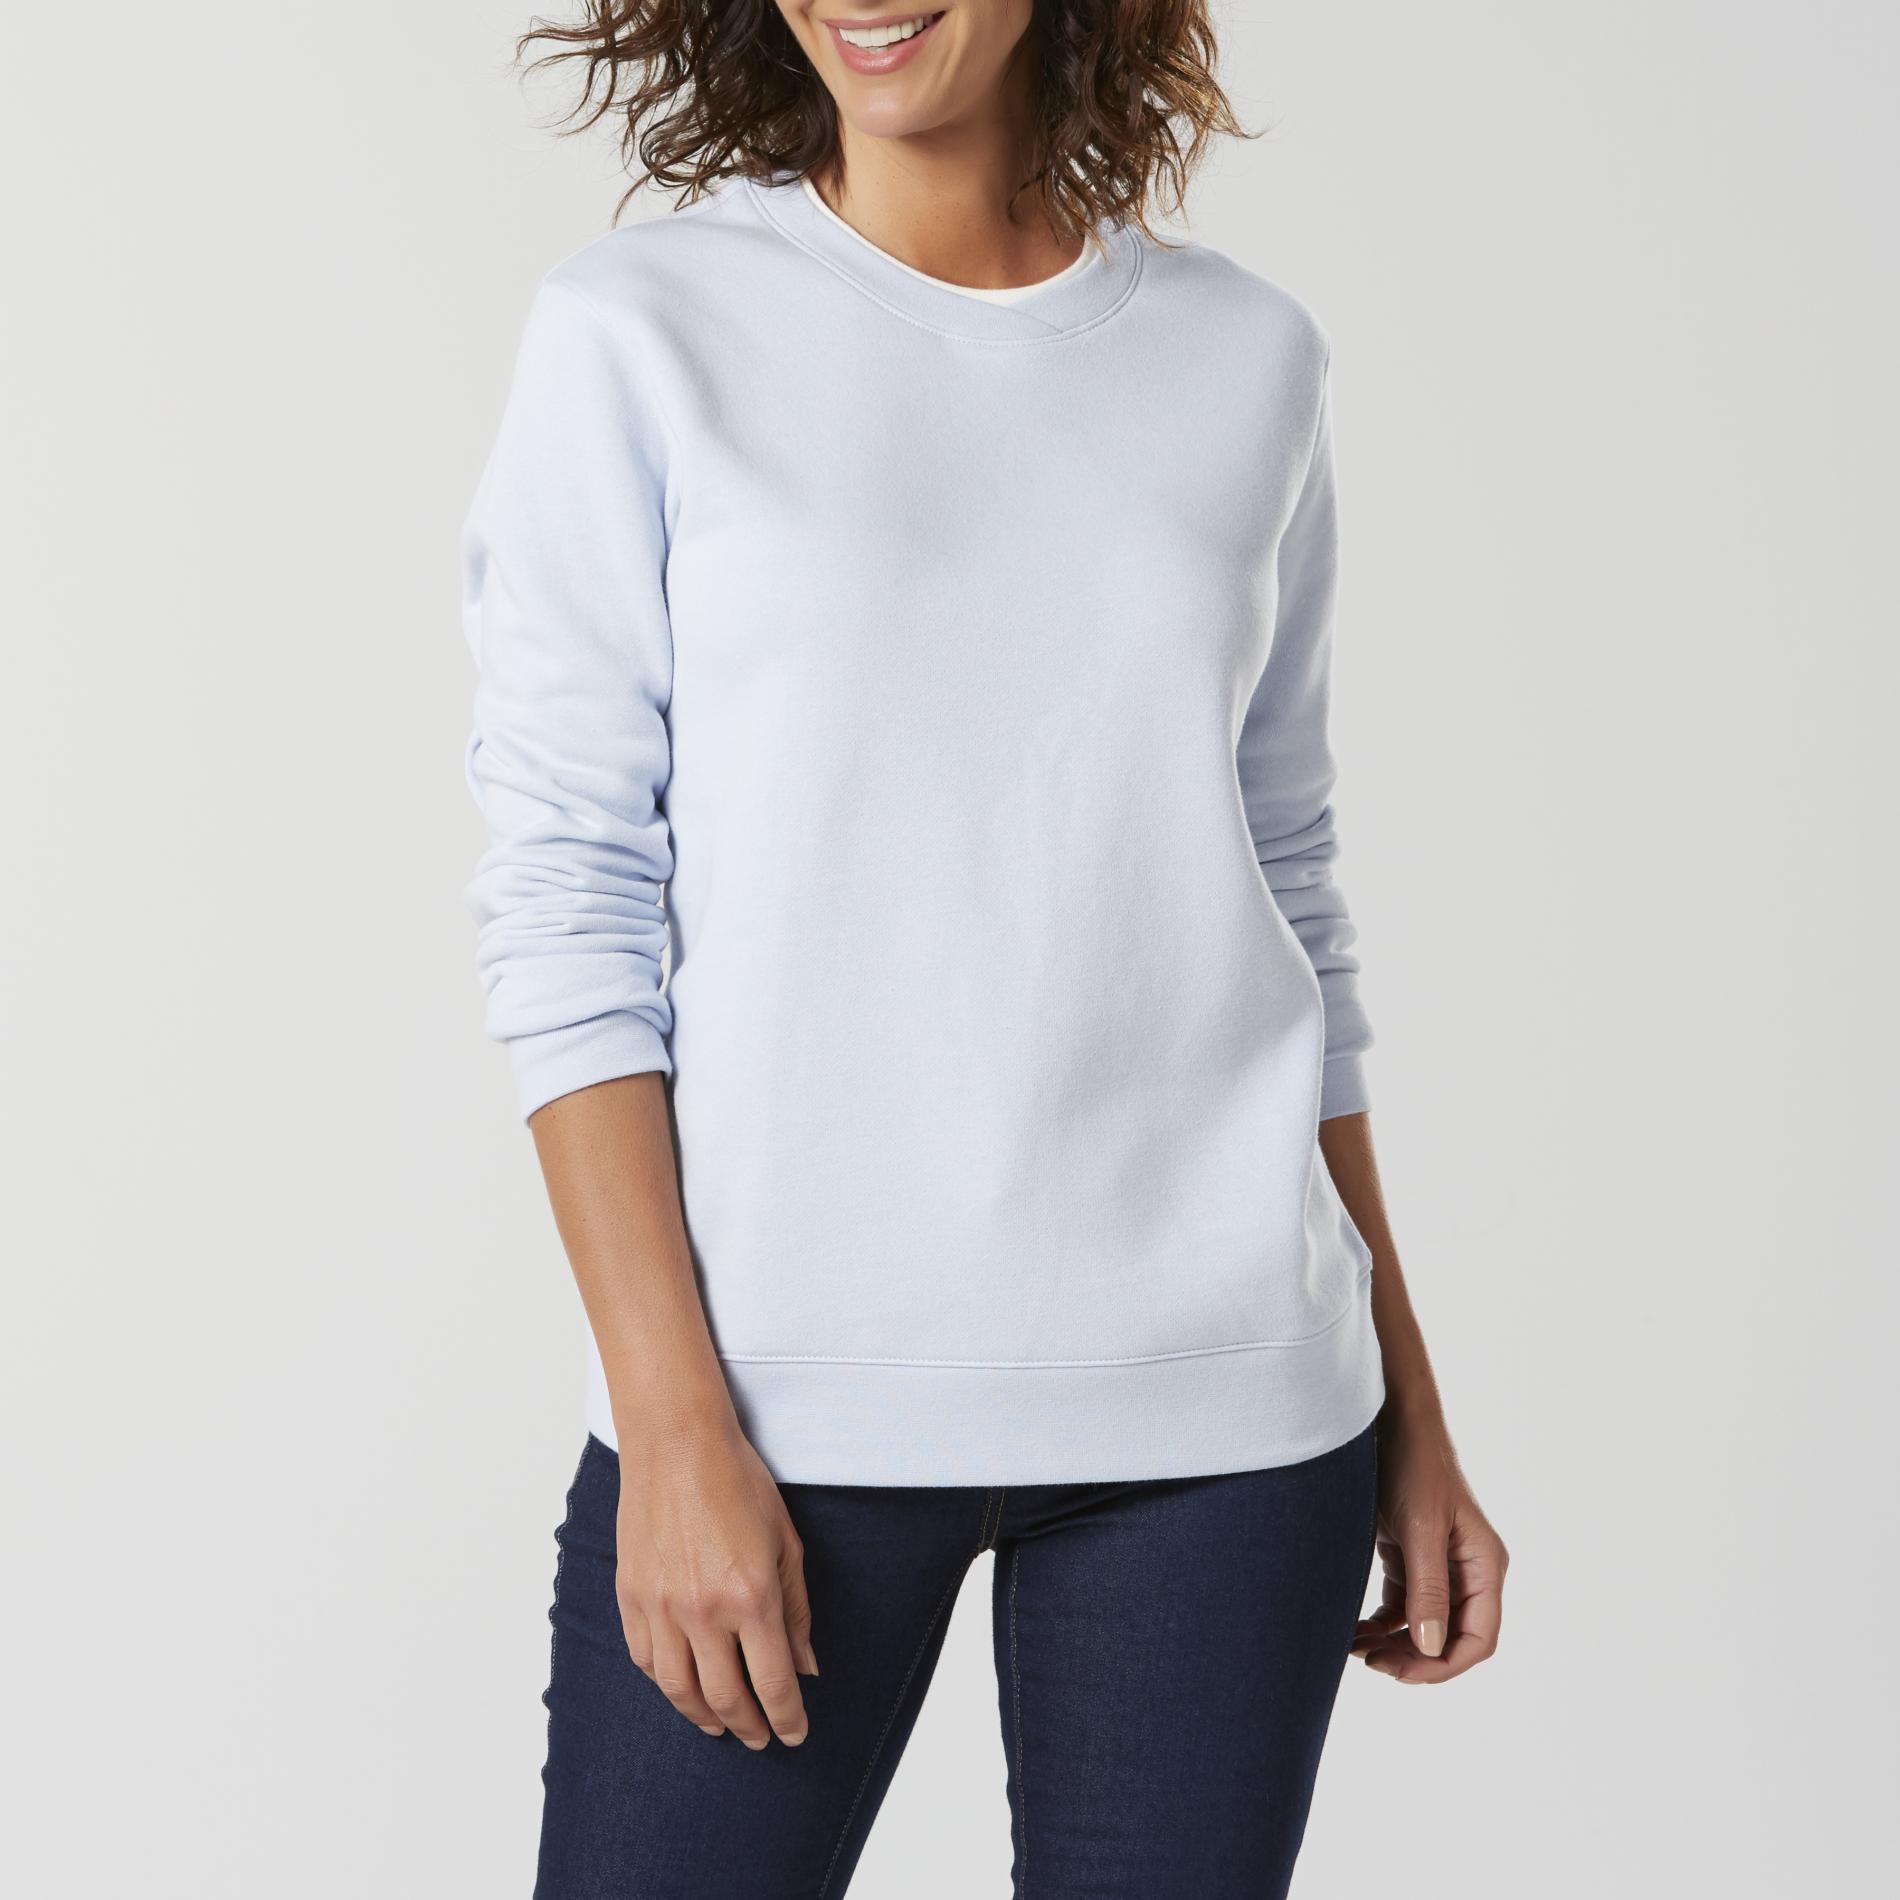 Basic Editions Women's Layered-Look Sweatshirt